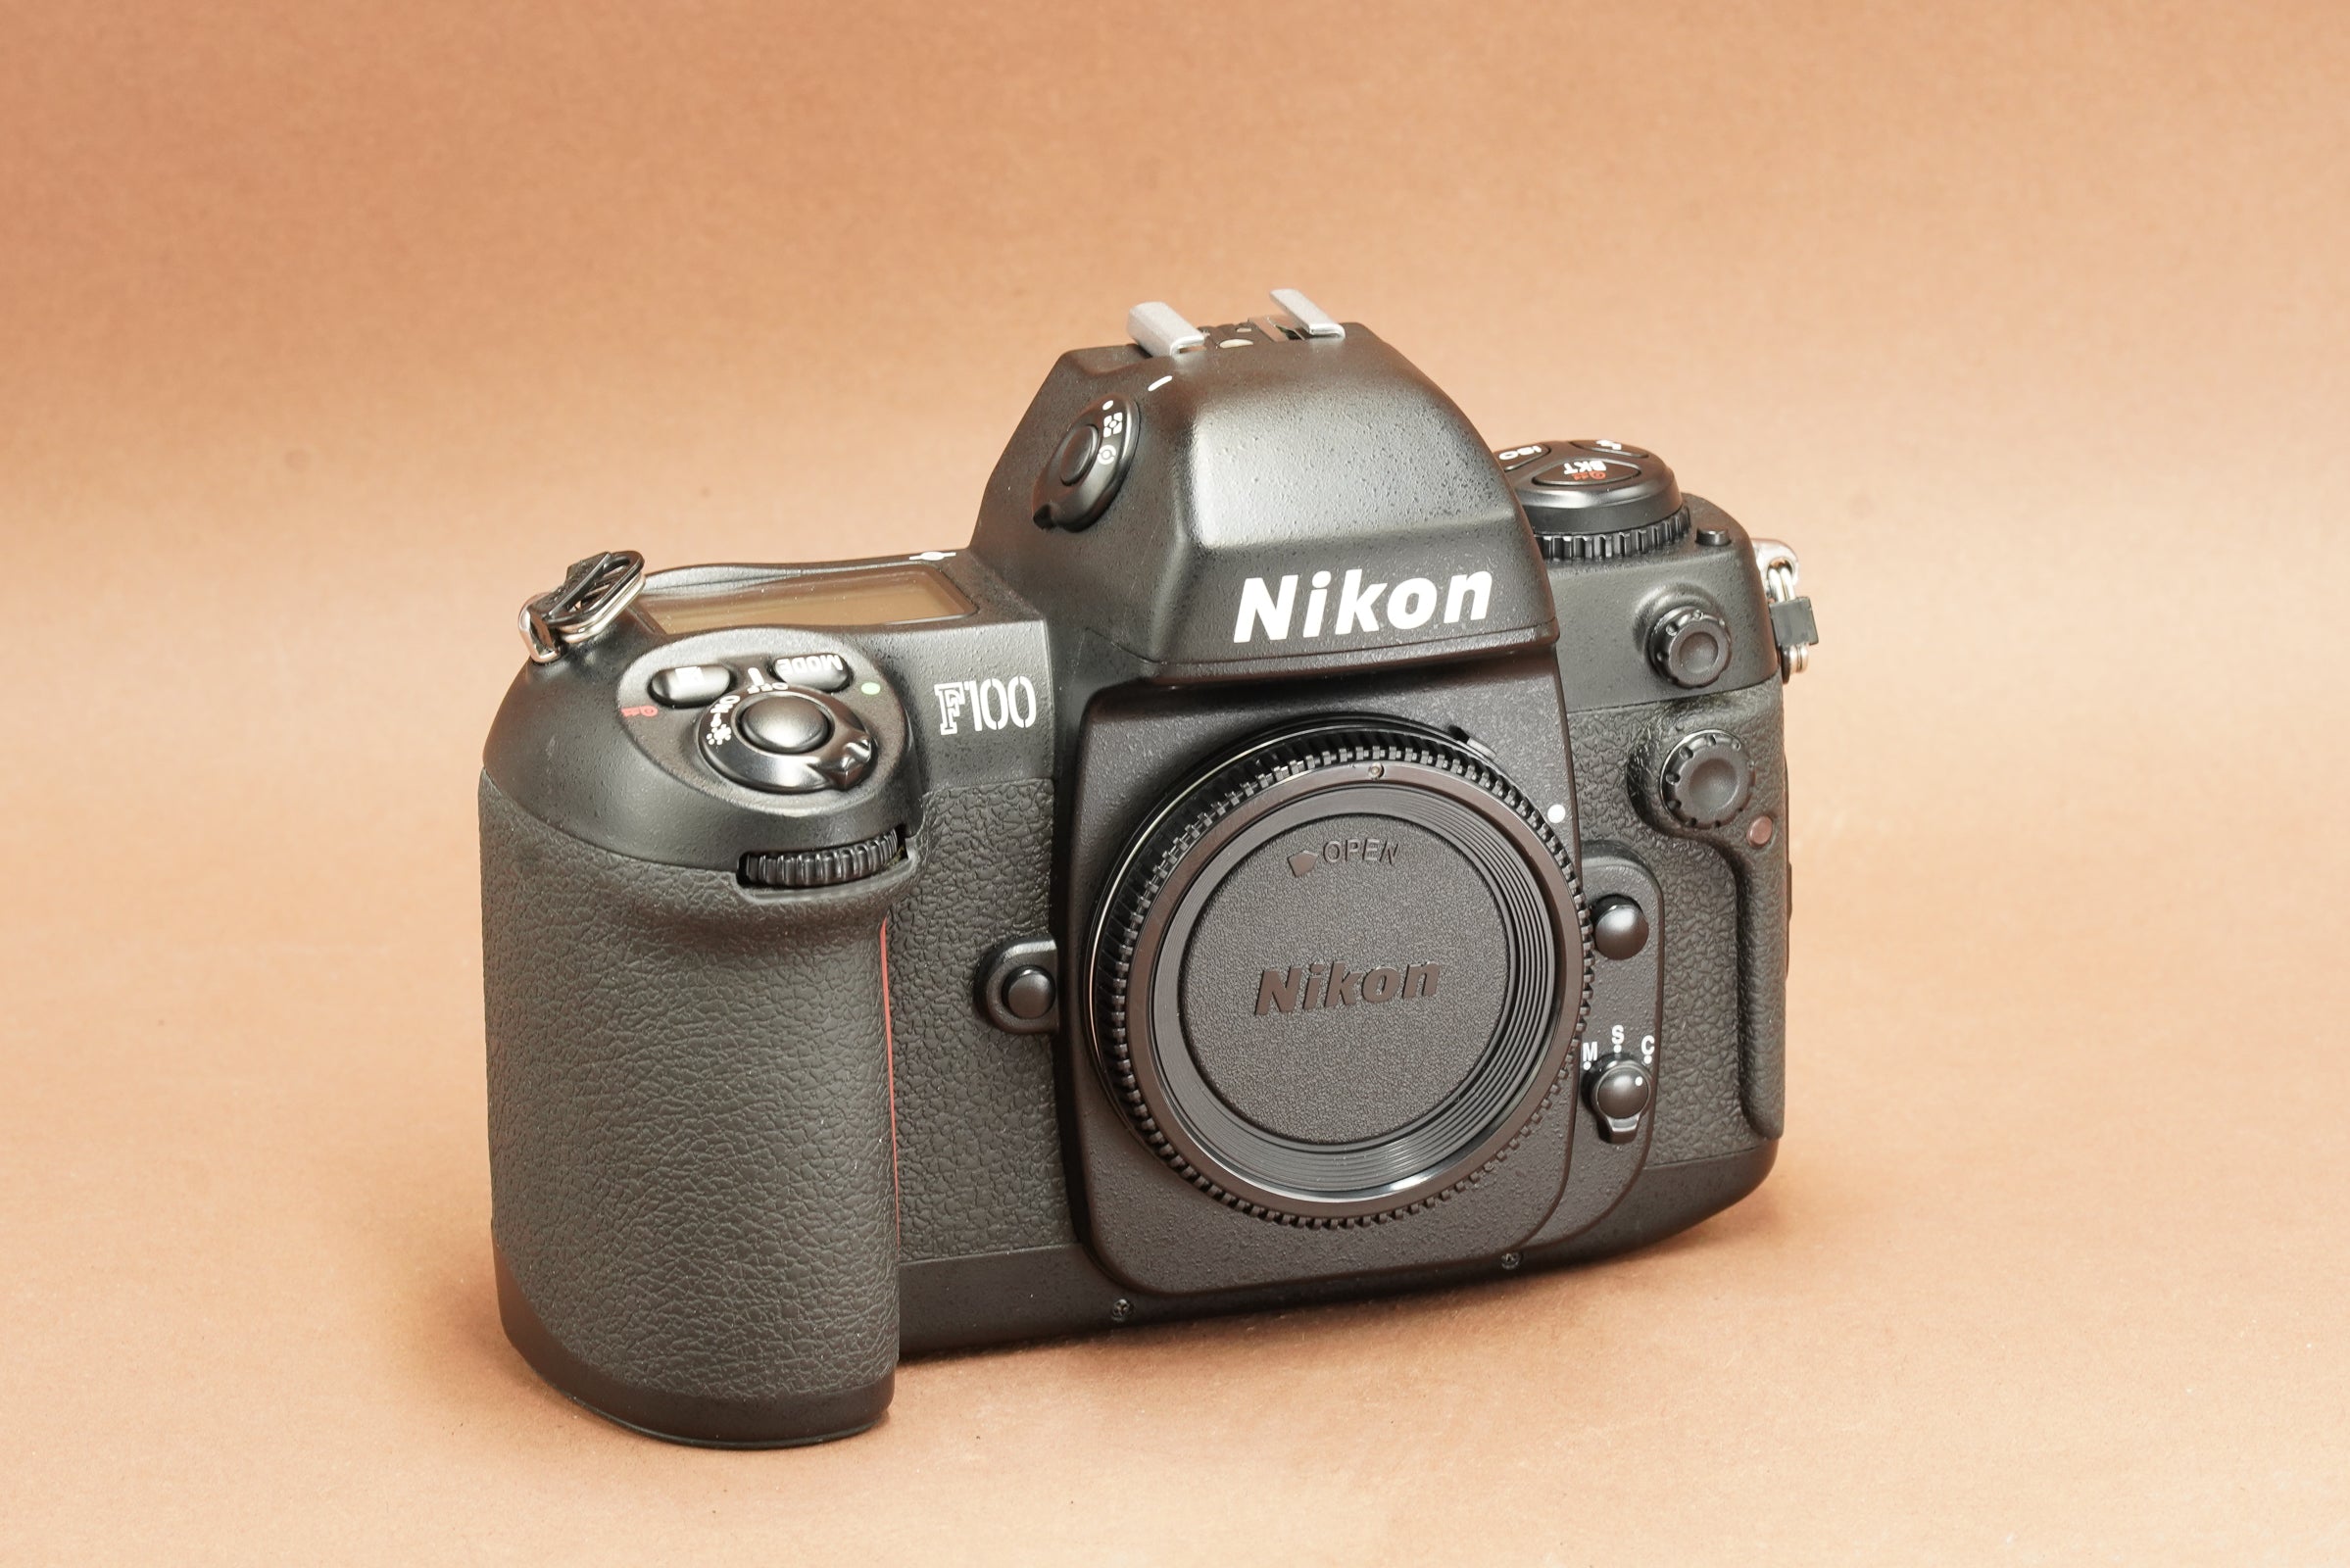 Nikon F100 body, black, with AF or manual lens choice